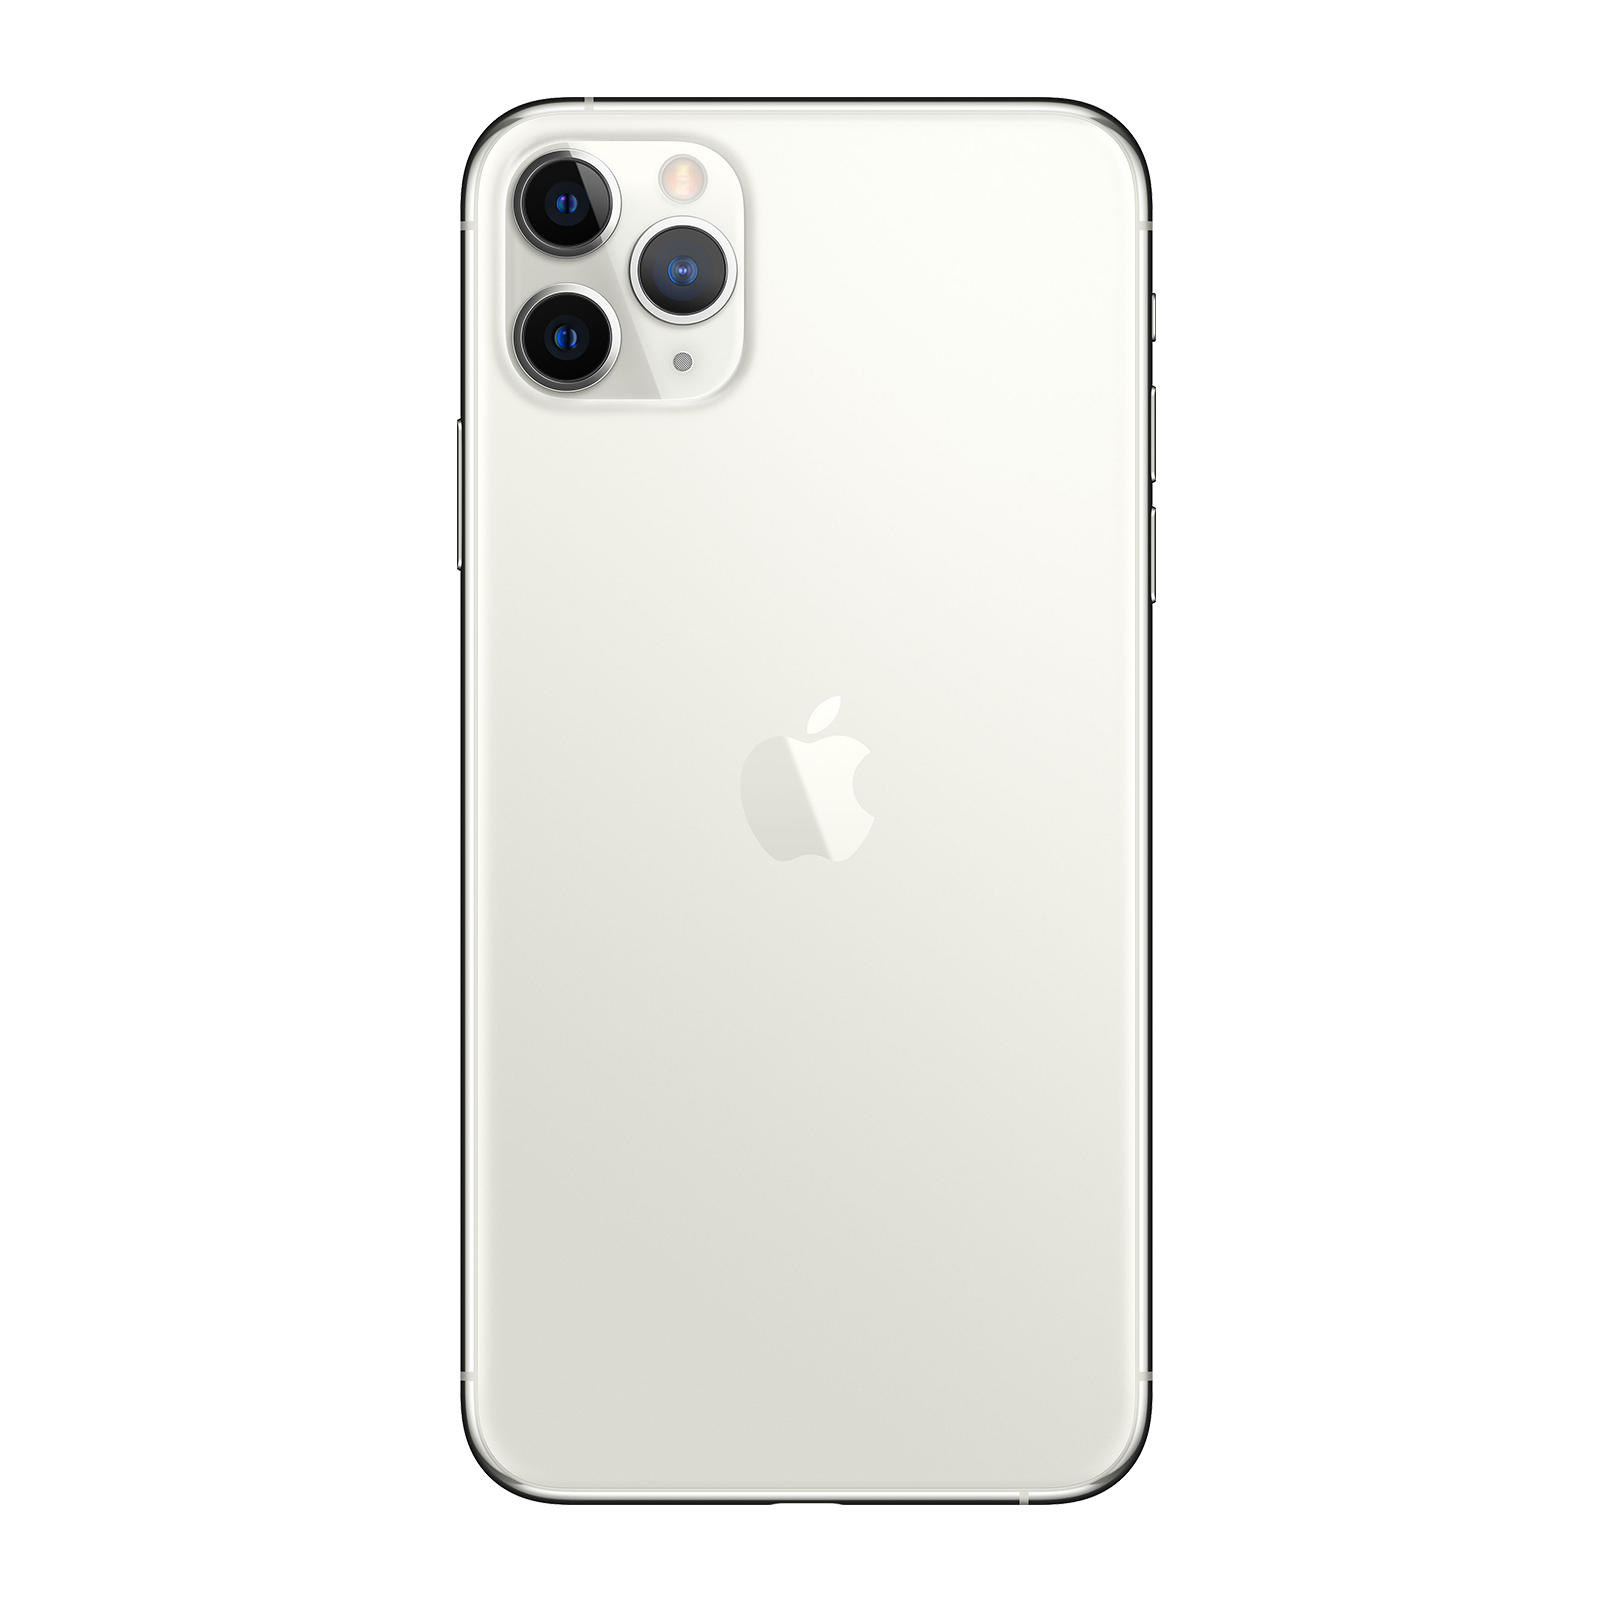 Apple iPhone 11 Pro 64GB Silver Pristine - AT&T